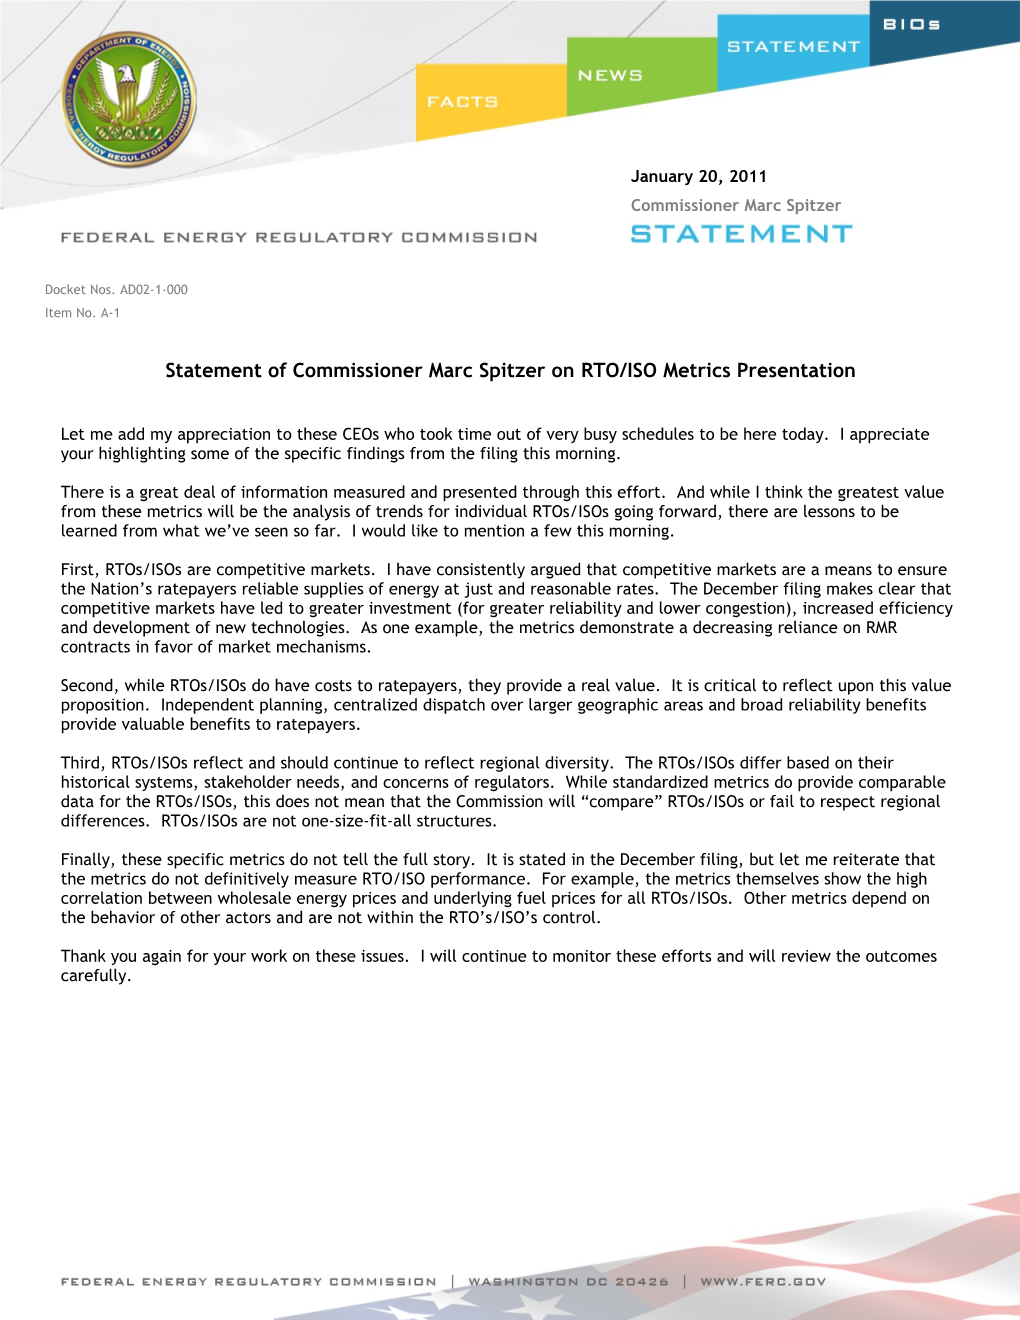 Statement of Commissioner Marc Spitzer on RTO/ISO Metrics Presentation